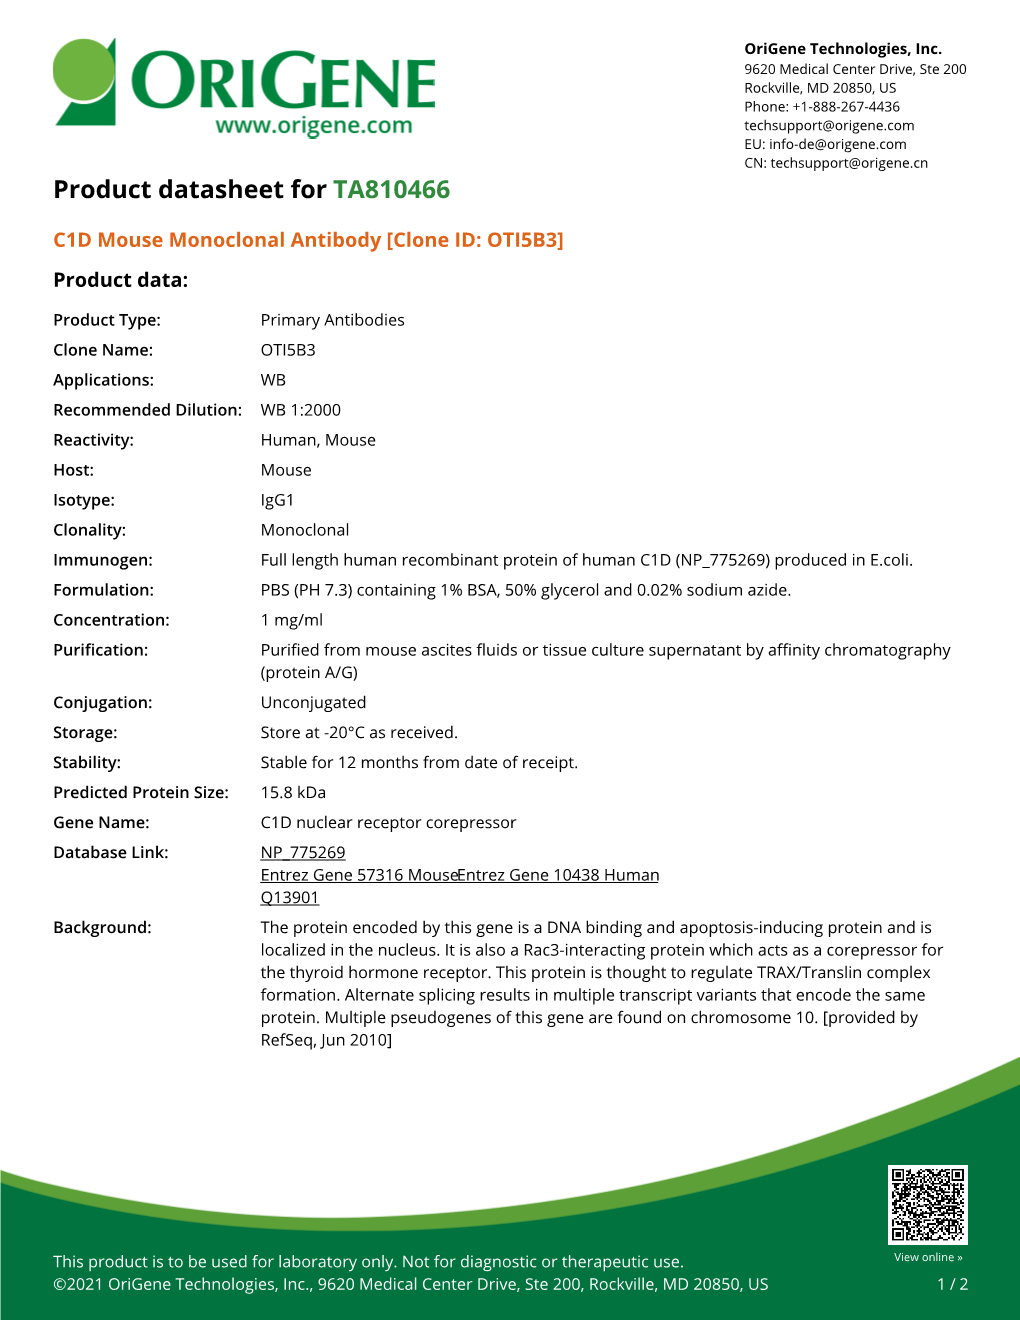 C1D Mouse Monoclonal Antibody [Clone ID: OTI5B3] Product Data